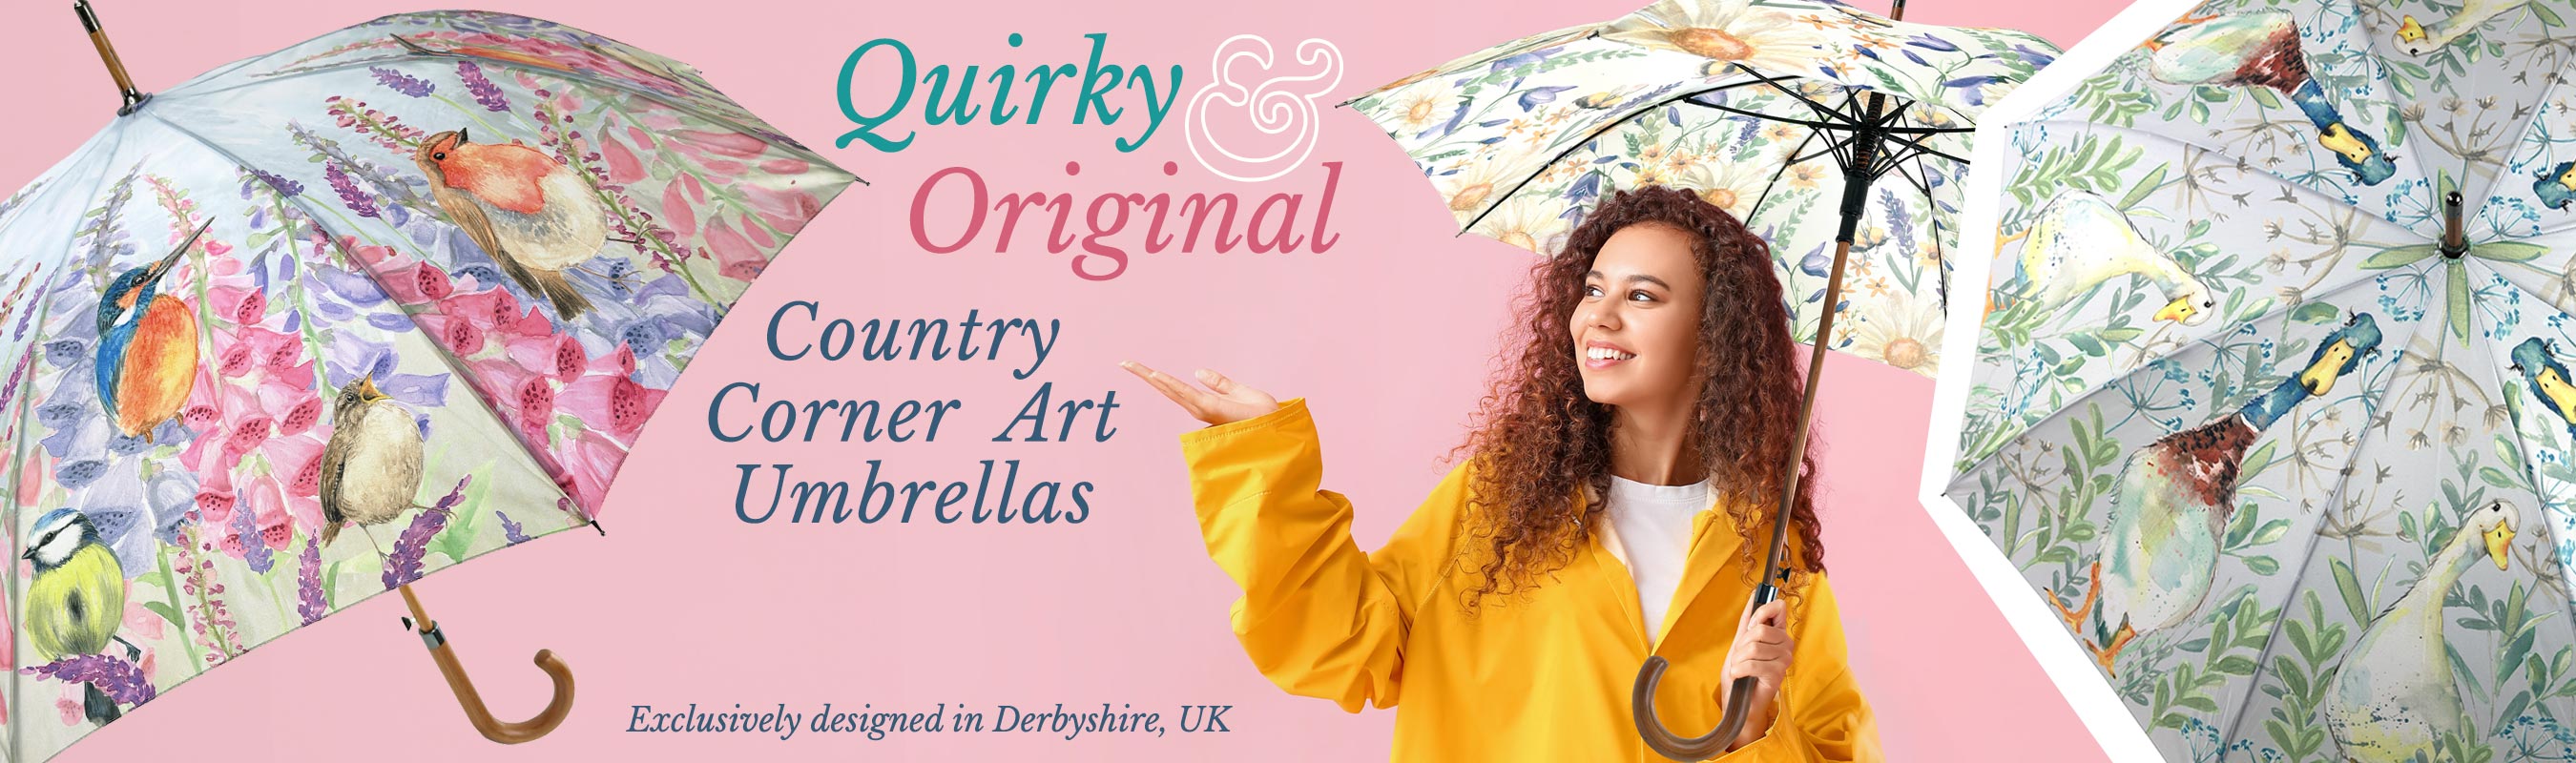 Country Corner Watercolour Art Umbrellas - Quirky & Original designs